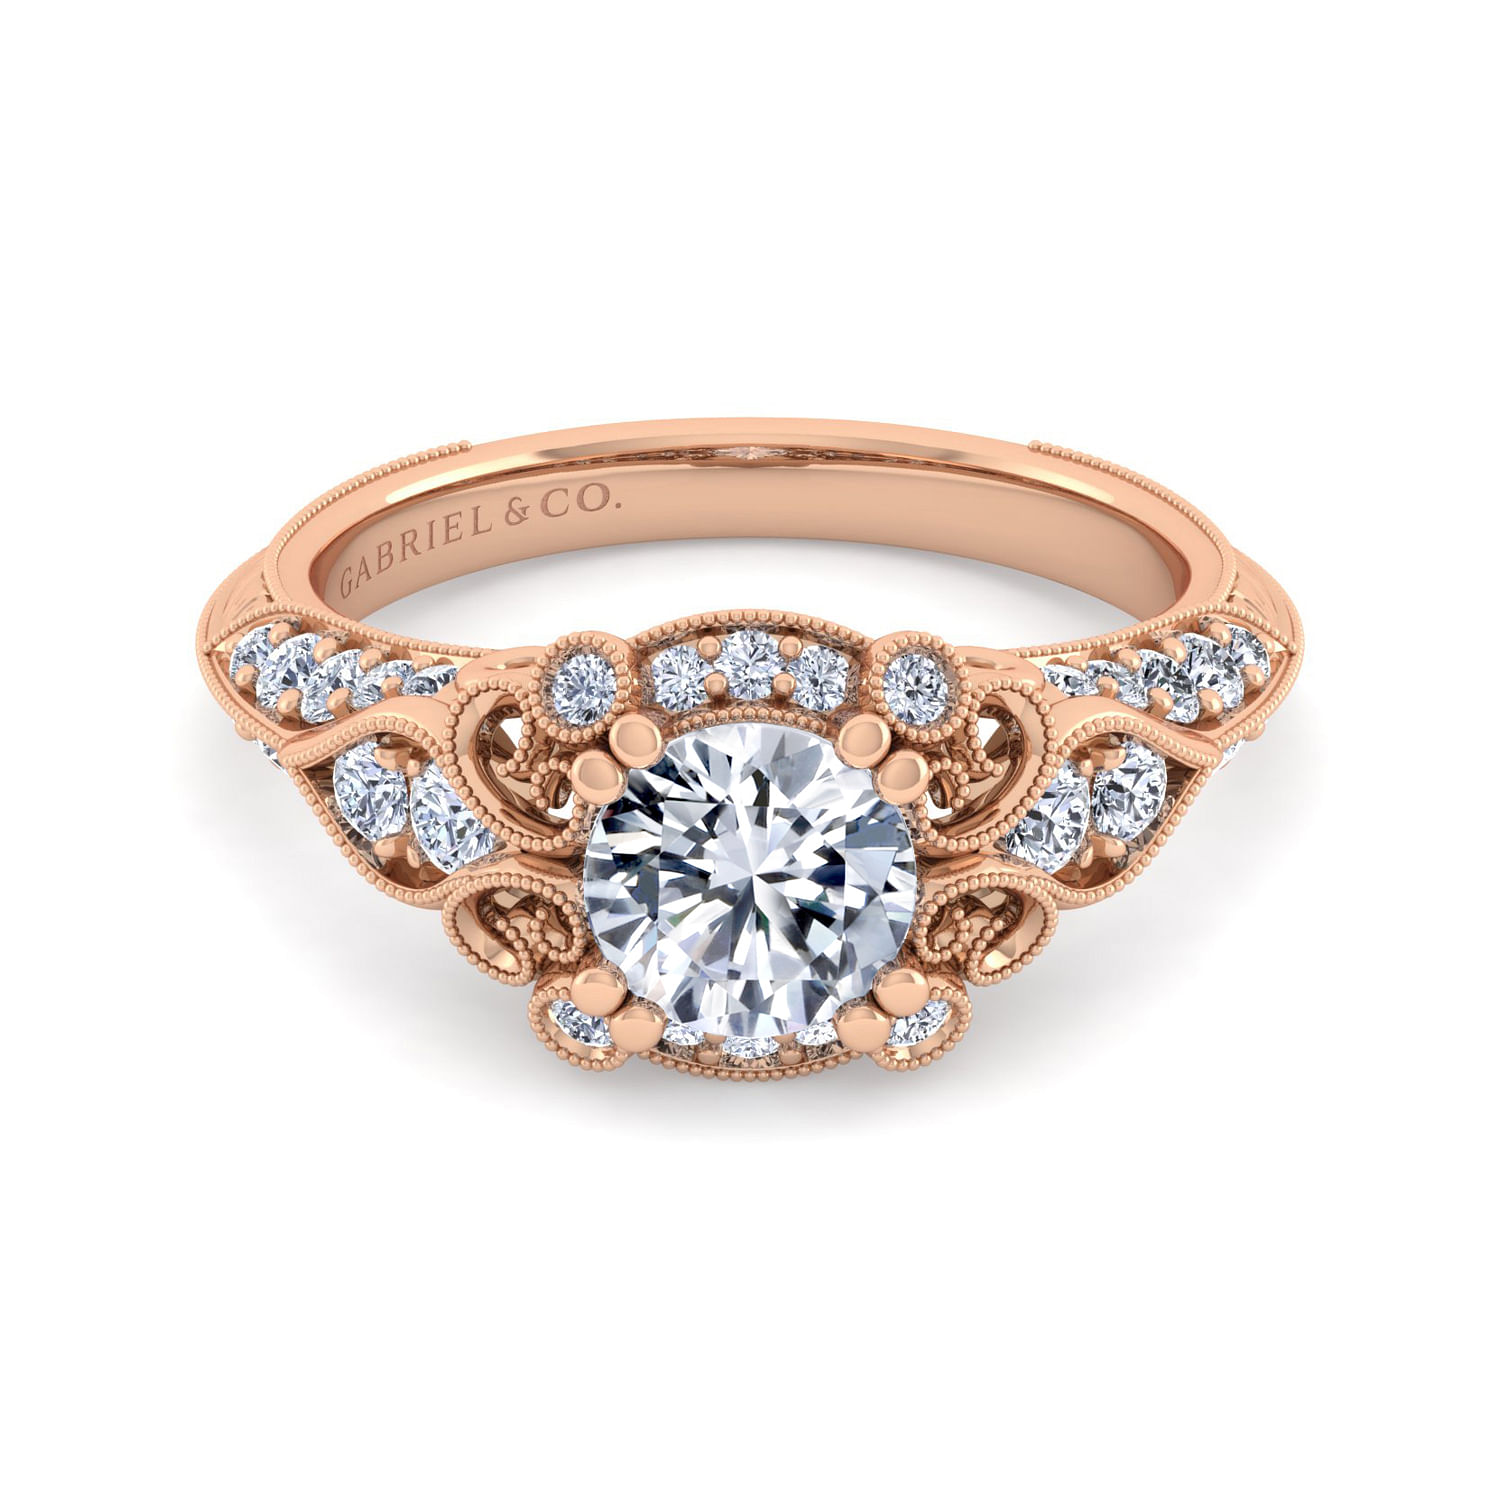 Vintage Inspired 14K Rose Gold Fancy Halo Round Diamond Engagement Ring